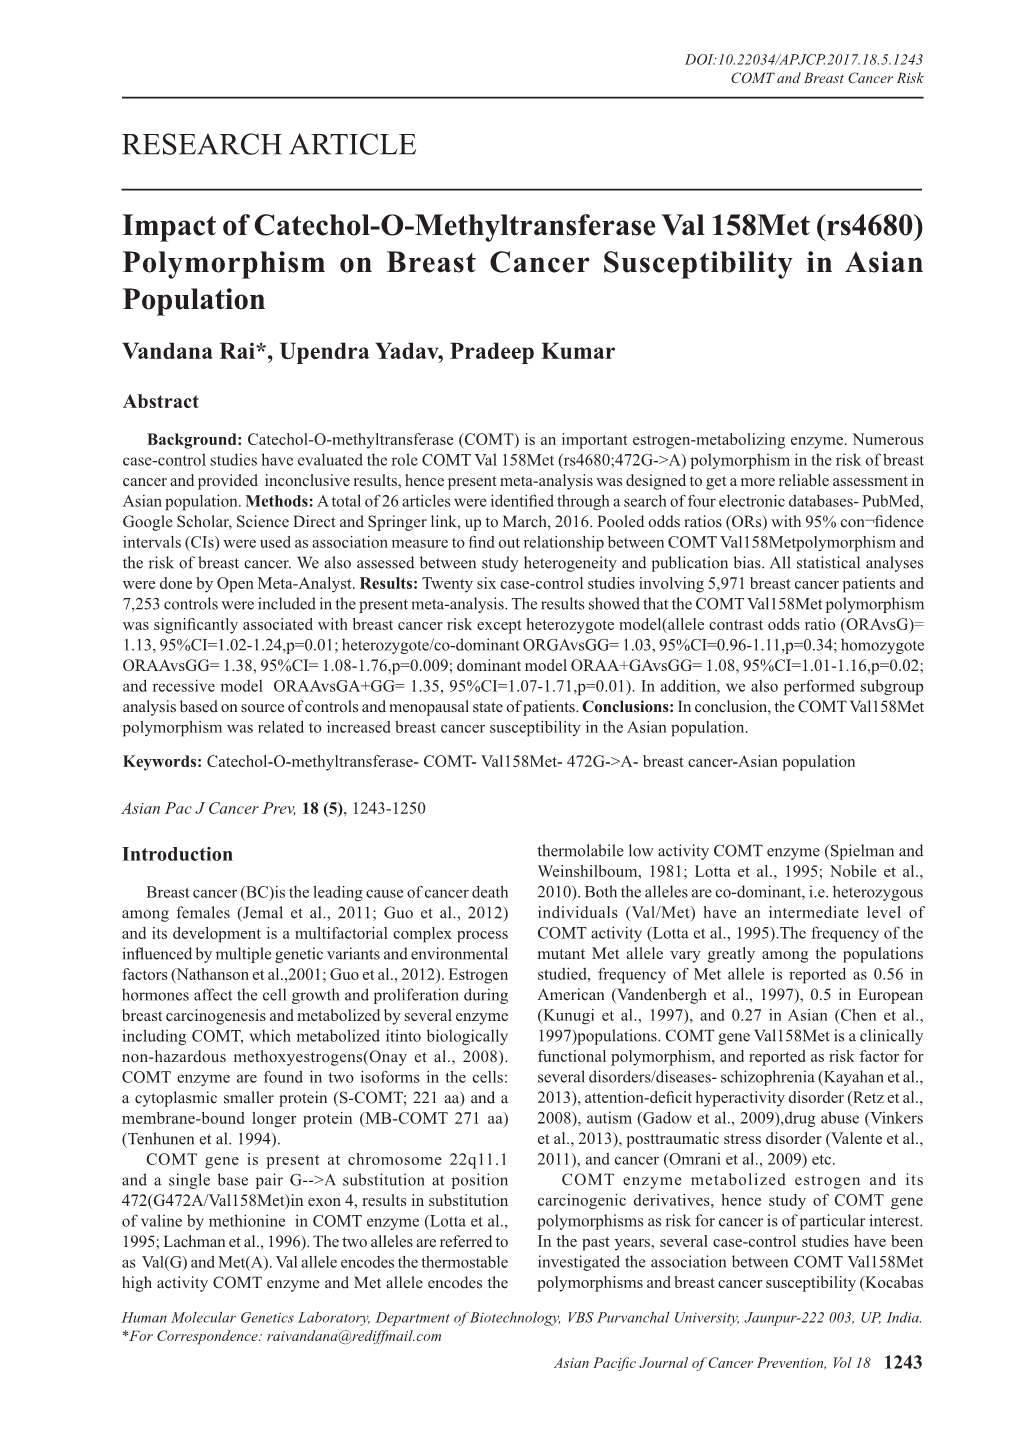 (Rs4680) Polymorphism on Breast Cancer Susceptibility in Asian Population Vandana Rai*, Upendra Yadav, Pradeep Kumar